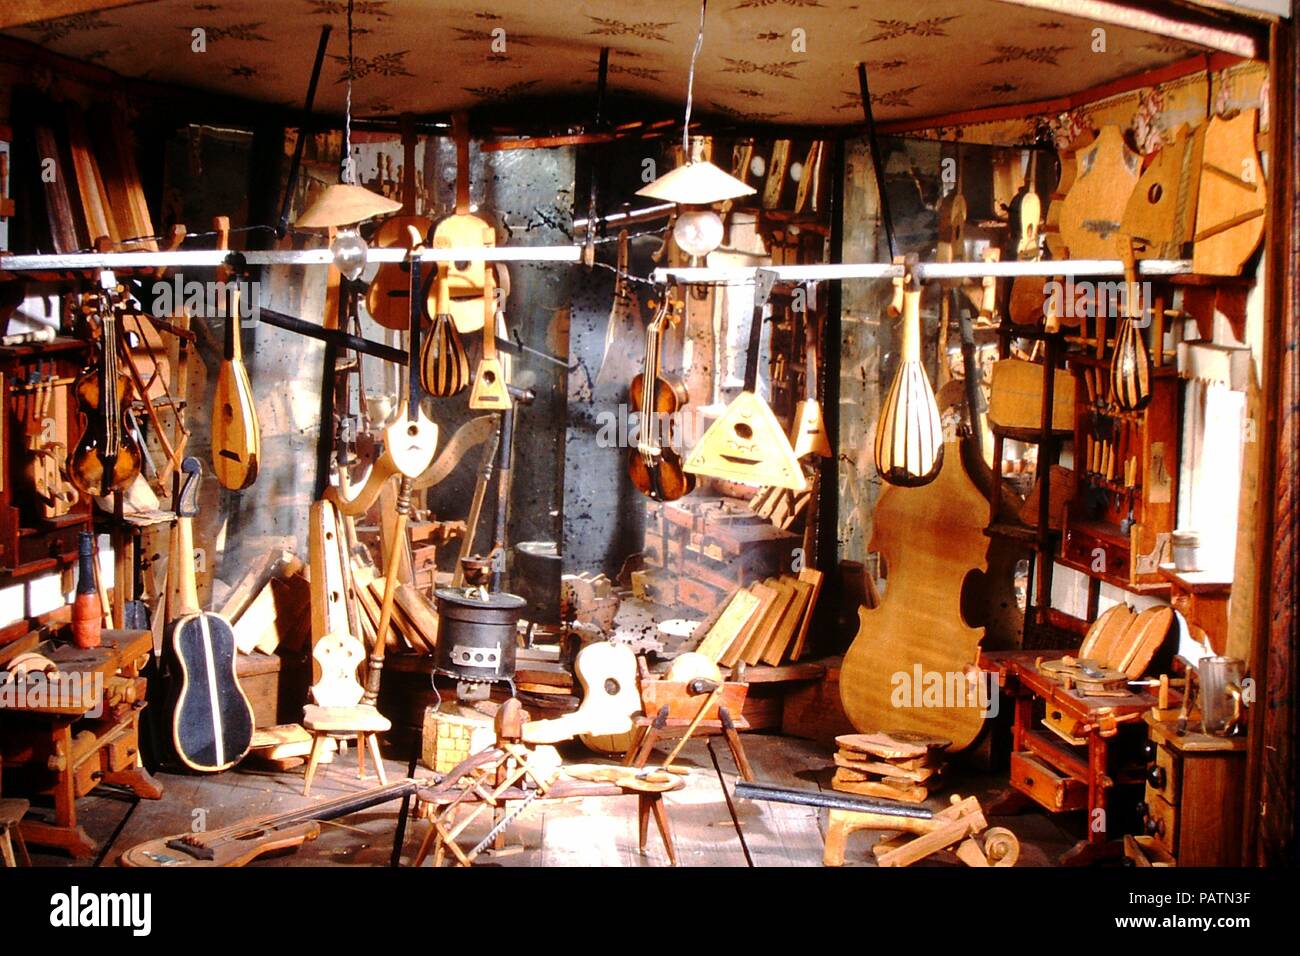 Luthier's Werkstatt Modell. Kultur: Tschechisch. Abmessungen: 61 x 55,9 x 48,3 cm (24 x 22 x 19 in.). Datum: Ca. 1830. Museum: Metropolitan Museum of Art, New York, USA. Stockfoto